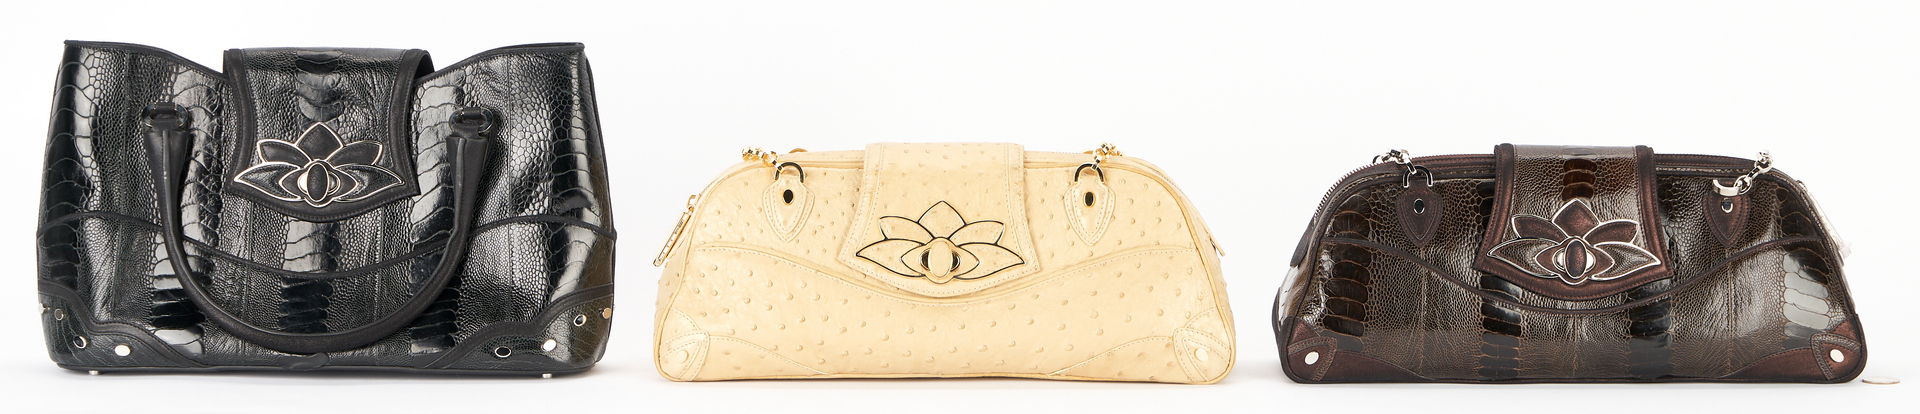 Lot 533: 3 Judith Leiber Handbags w/ Lotus Details